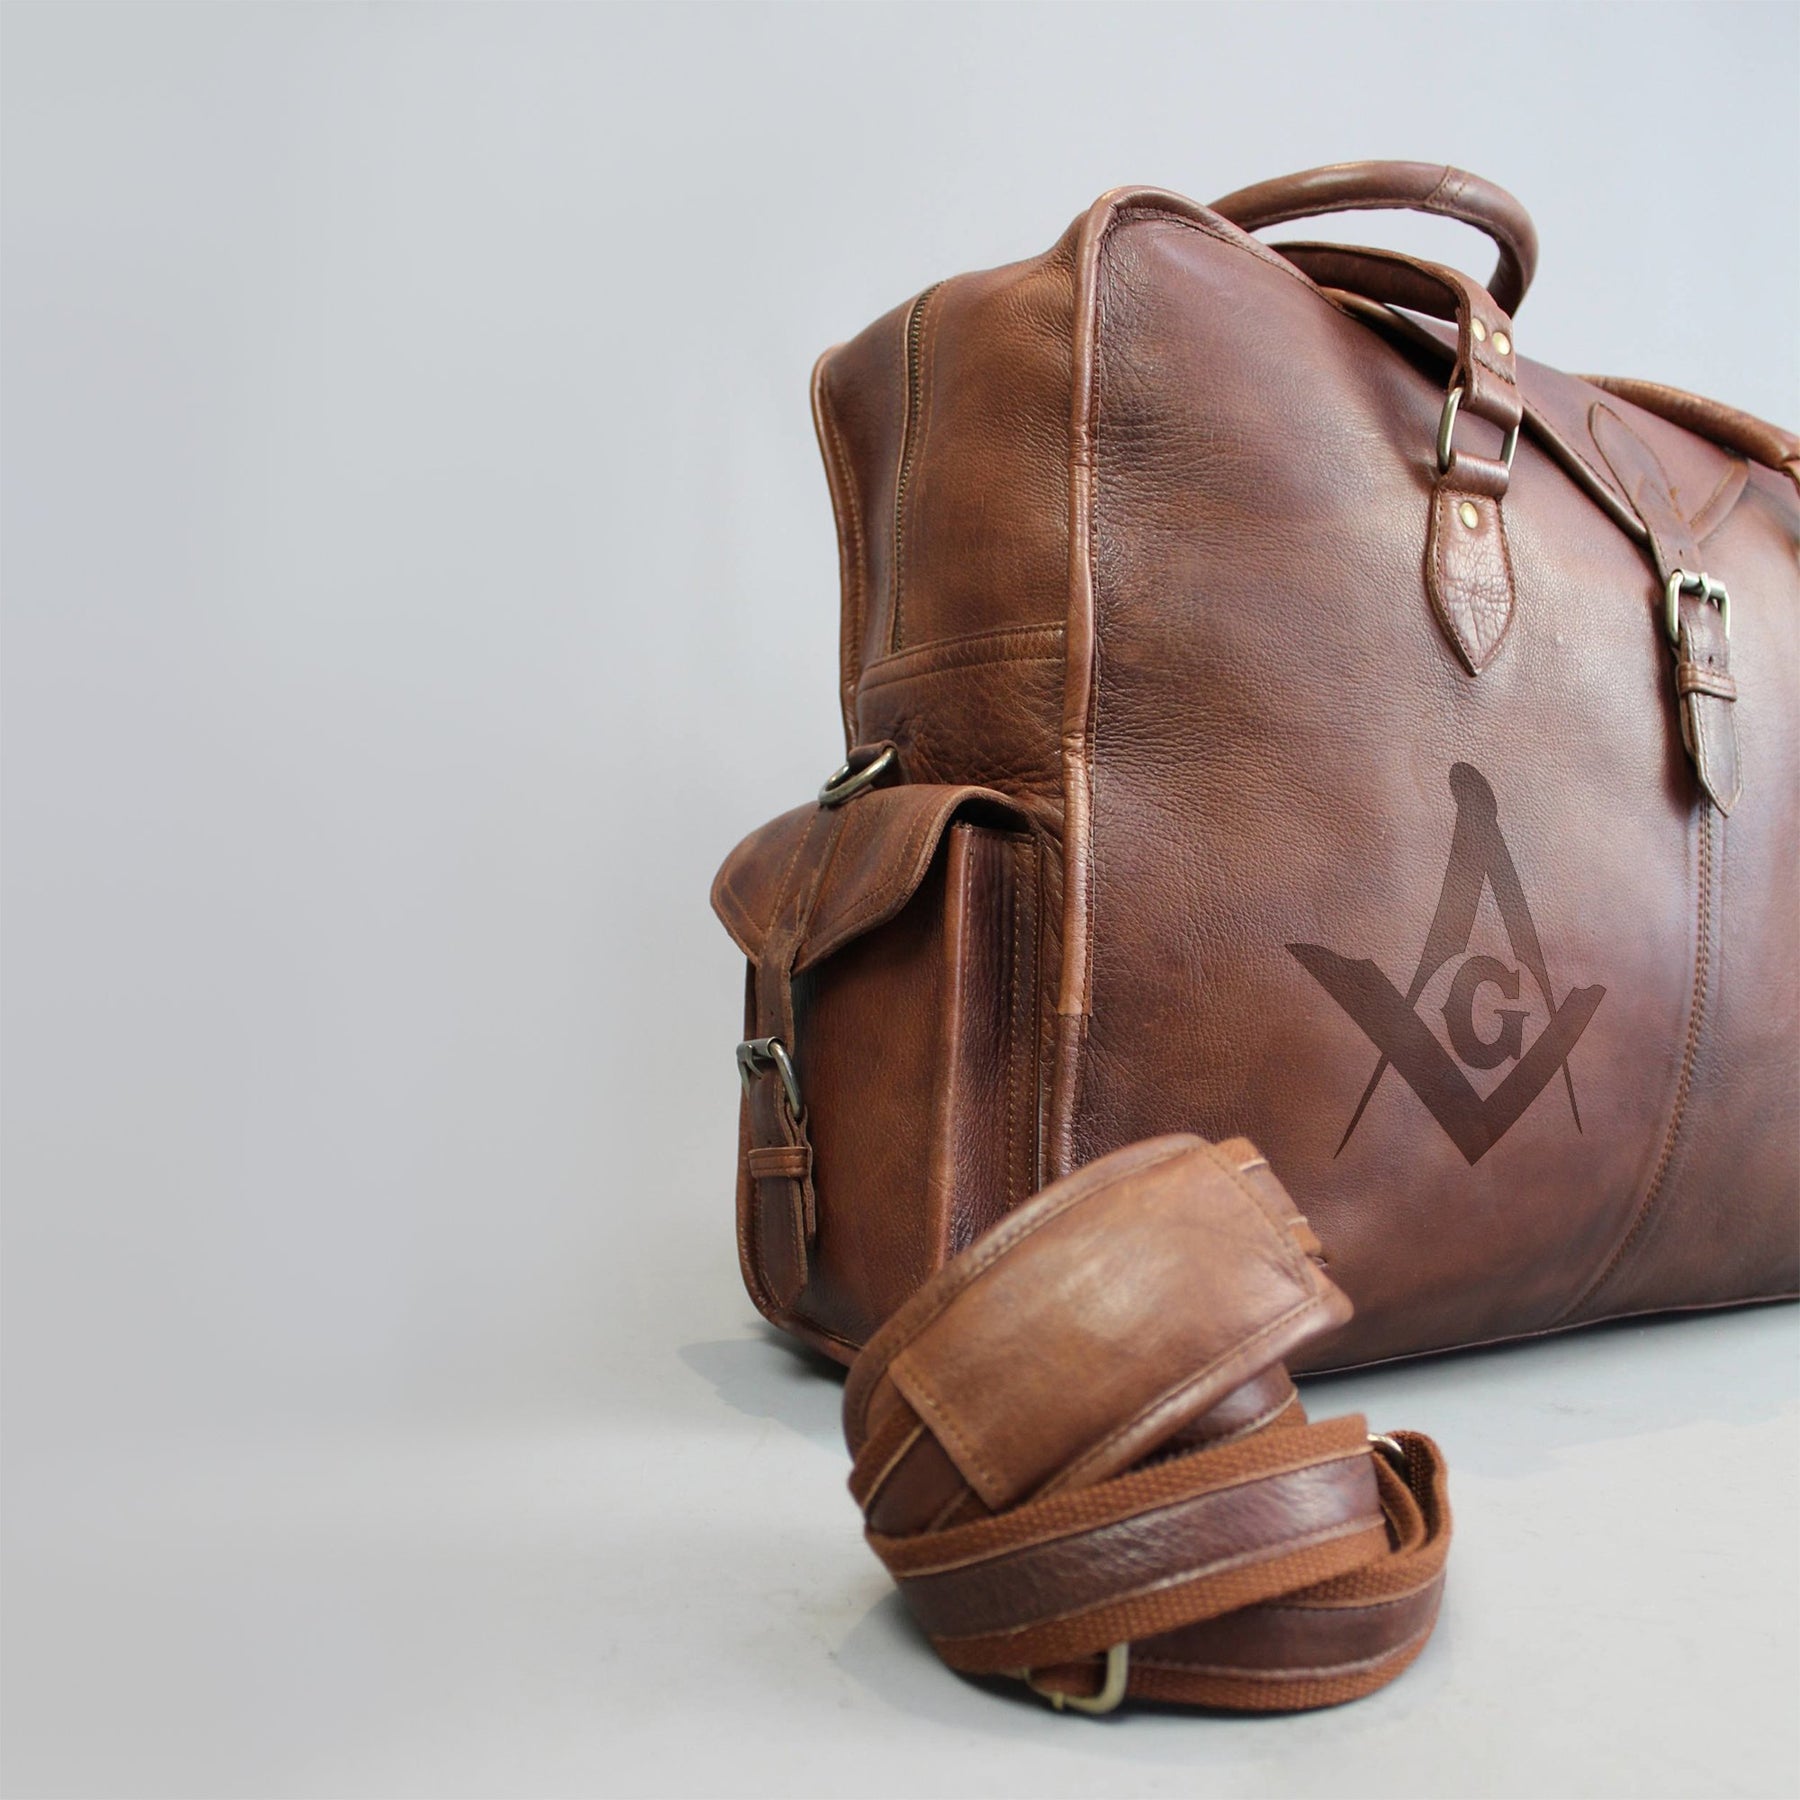 Master Mason Blue Lodge Travel Bag - Genuine Brown Leather - Bricks Masons